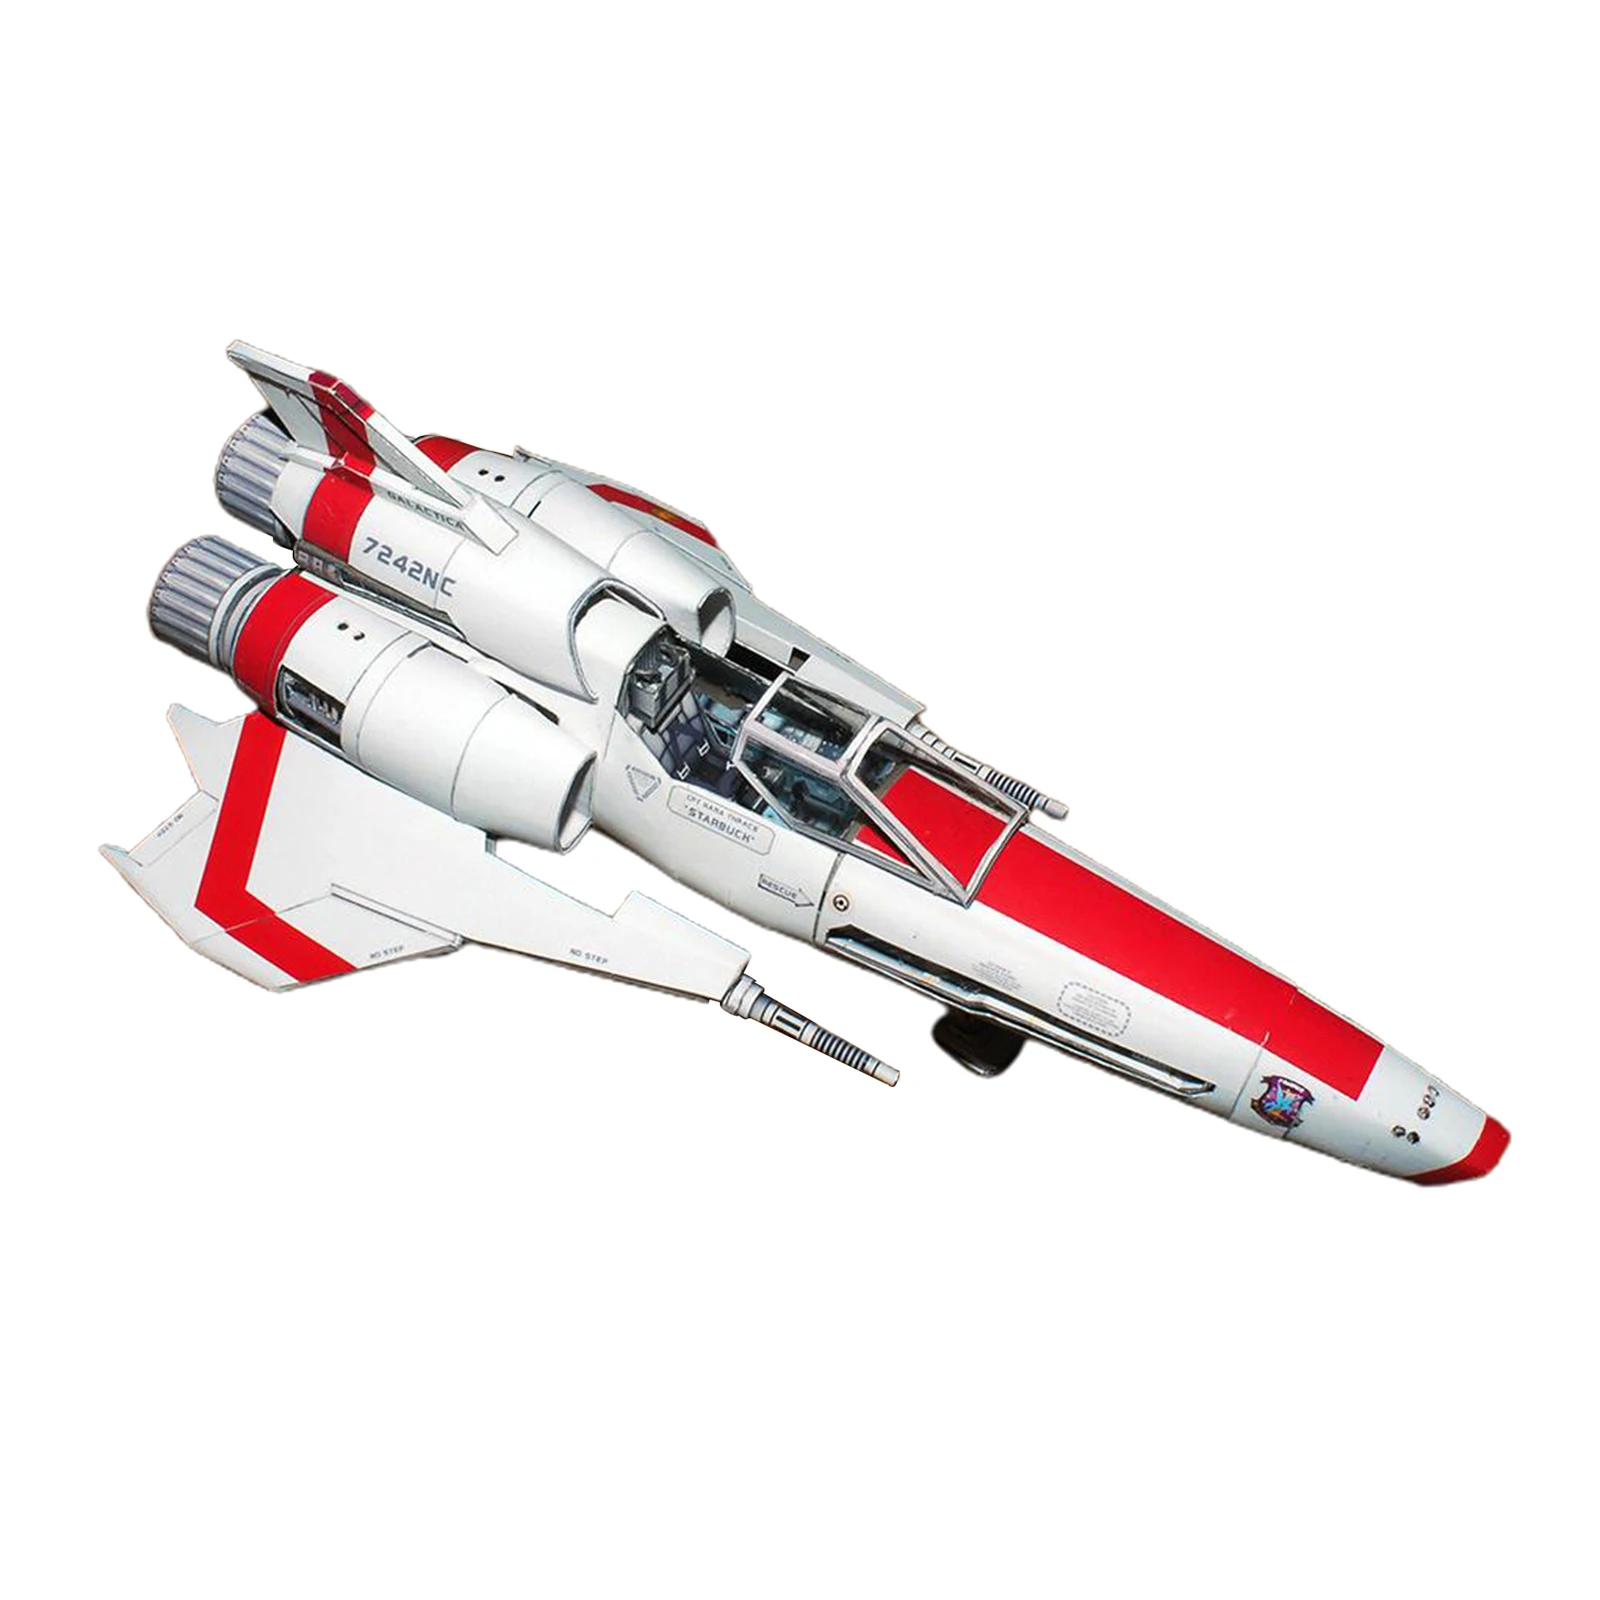 Battlestar Galactica  Mk II Ship 3D Paper Model Kit Spaceship DIY Spacecraft Crafts, 15x9cm, not suitable for novices.